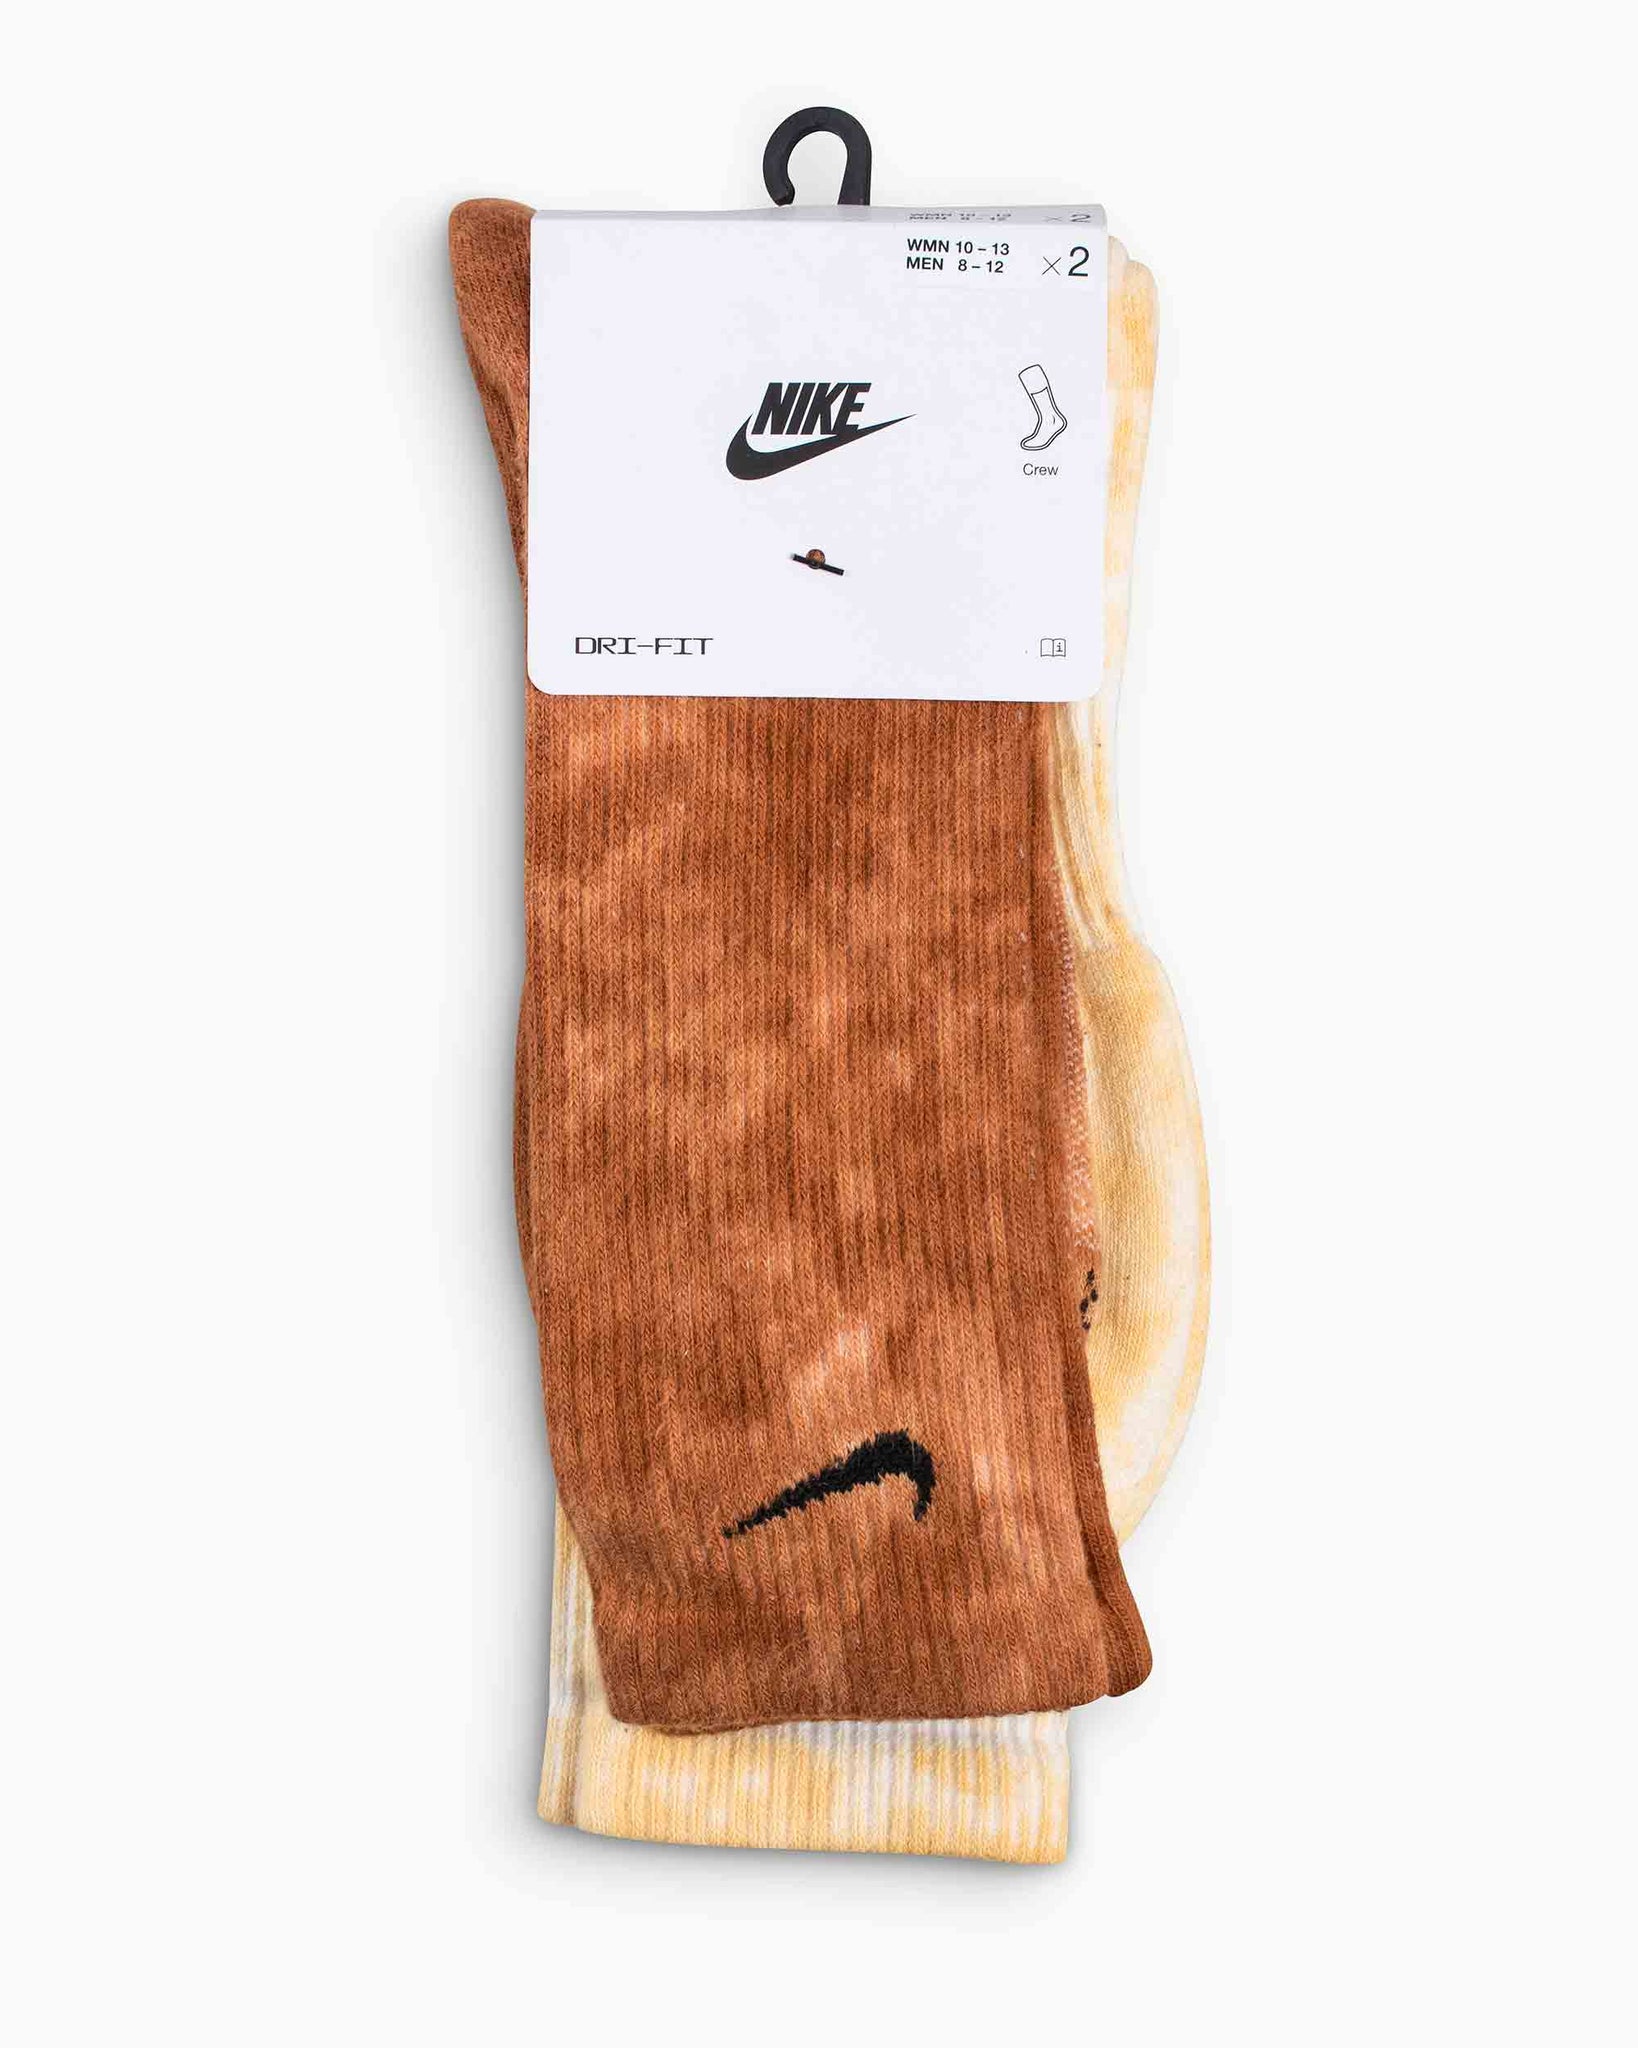 Nike Everyday Plus Retro Cushioned Crew Socks 6-Pack